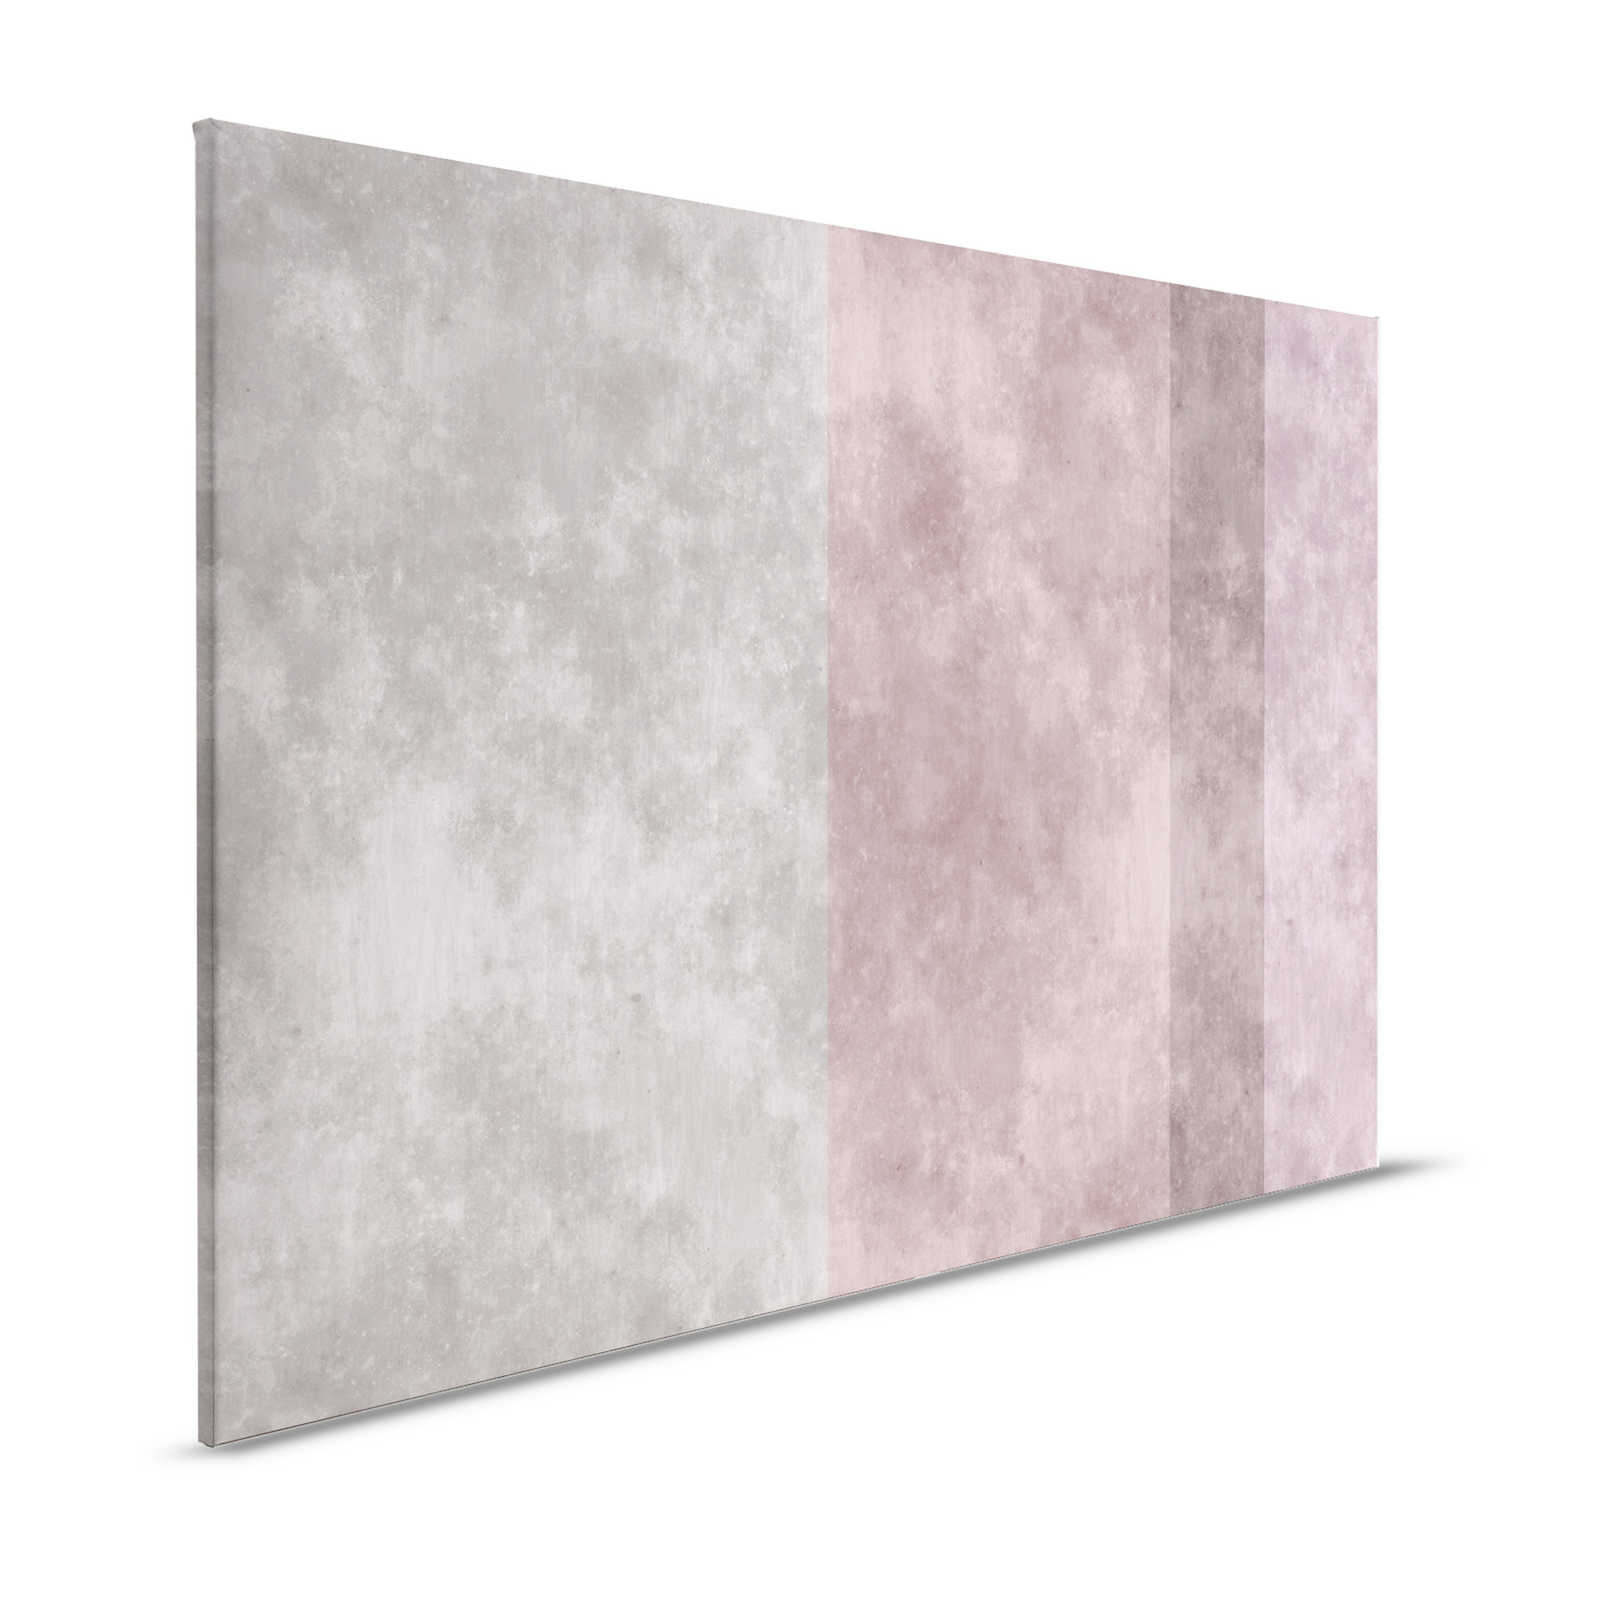 Cuadro lienzo aspecto hormigón con rayas | gris, rosa - 1,20 m x 0,80 m
